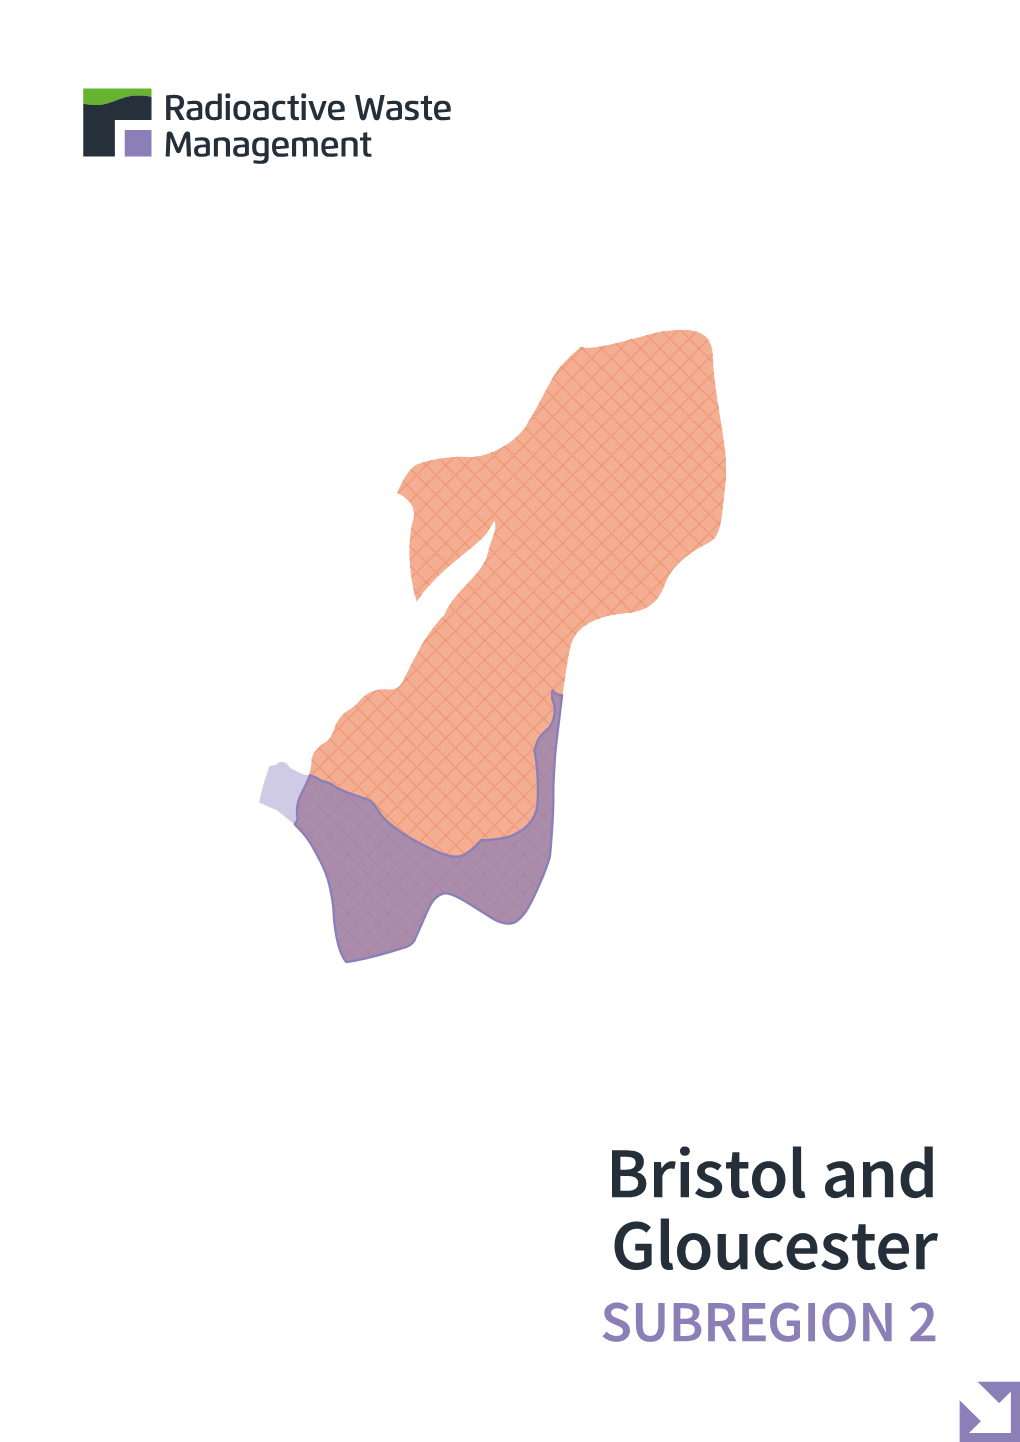 RWM Bristol and Gloucester Subregion 2